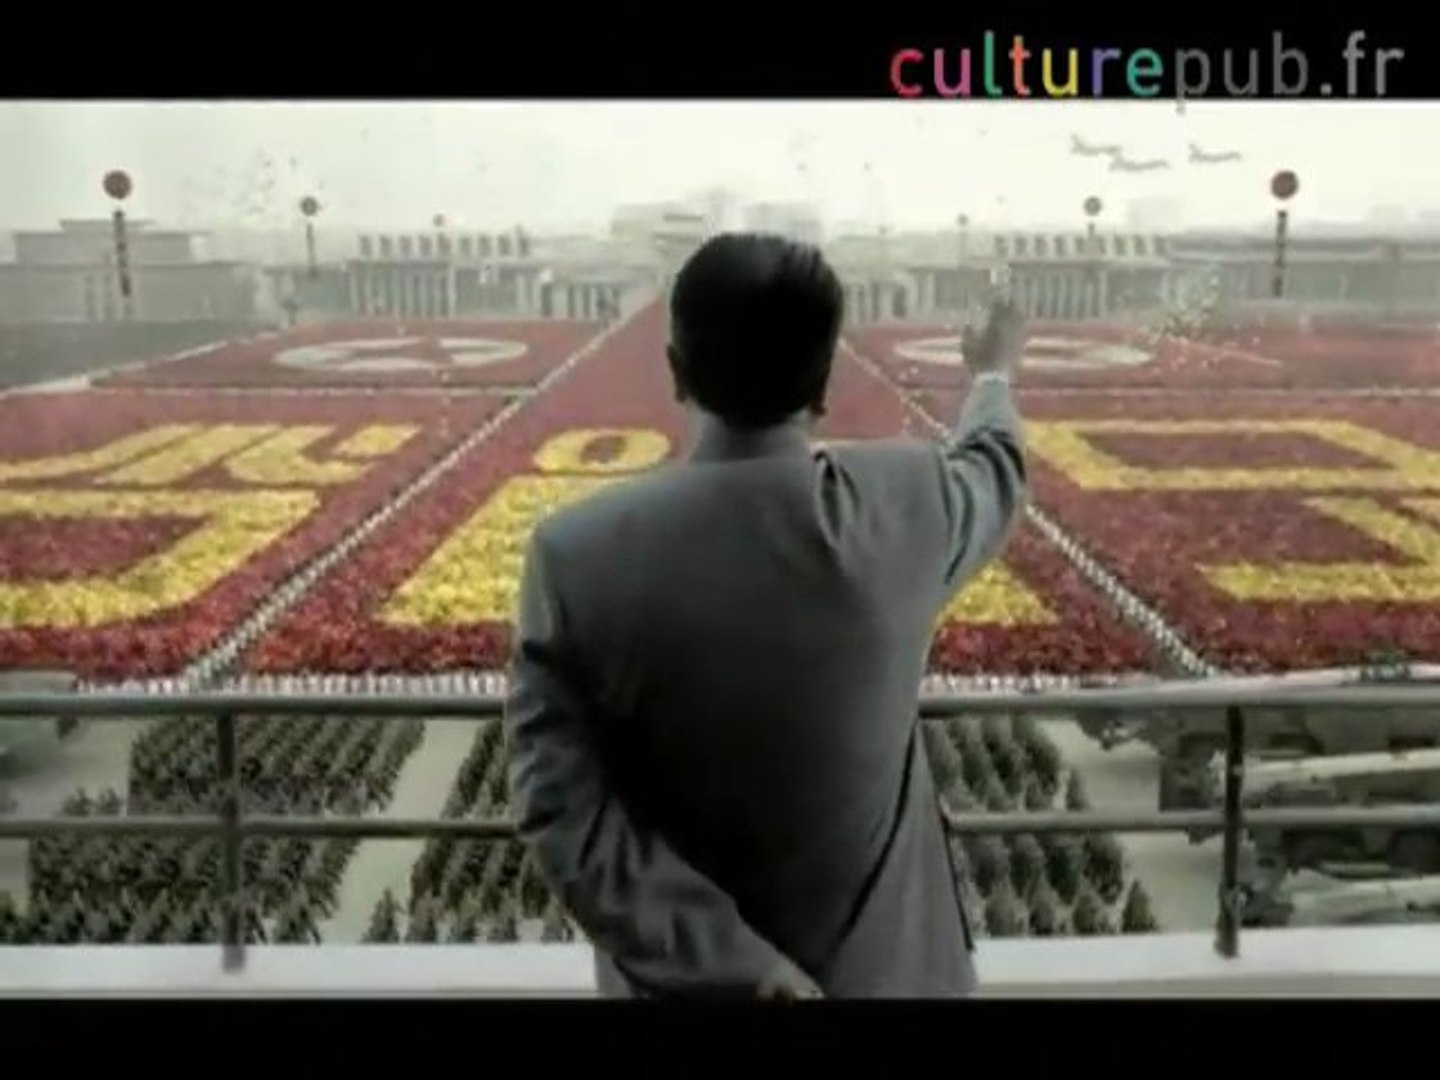 Funny Dictator commercials: revolutionary !